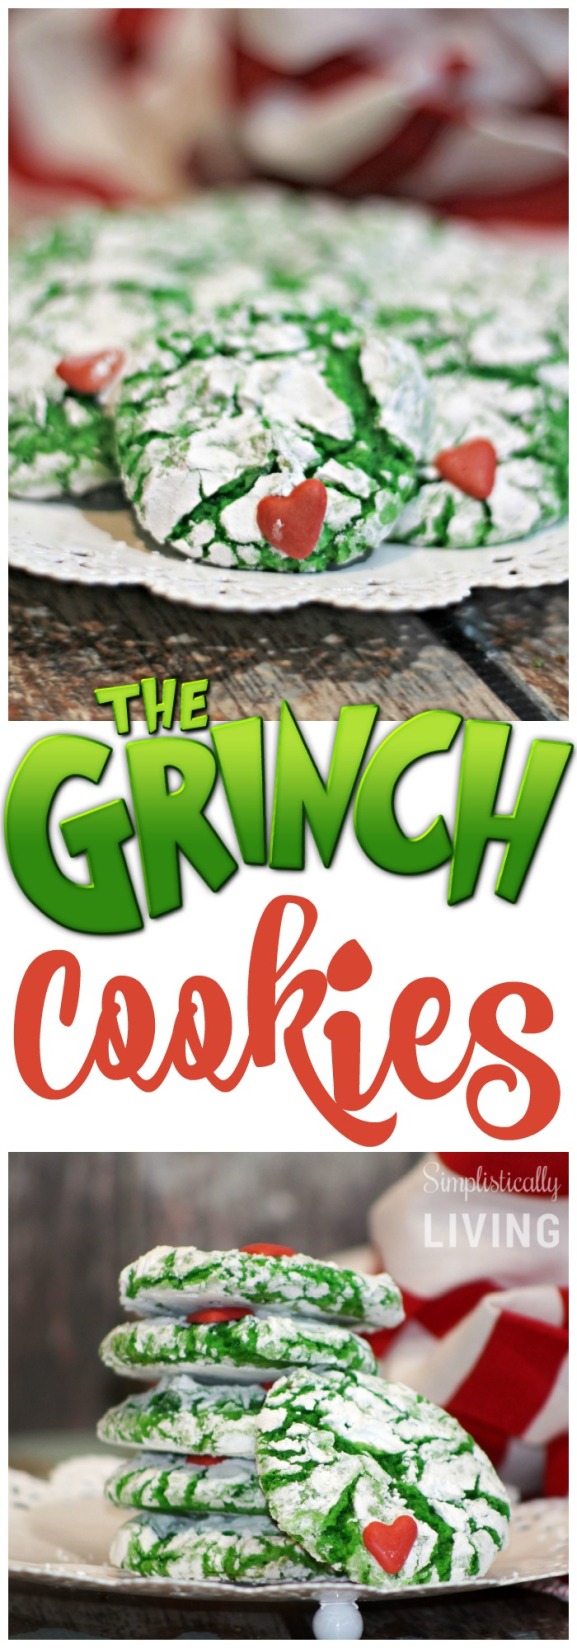 grinch-cookies